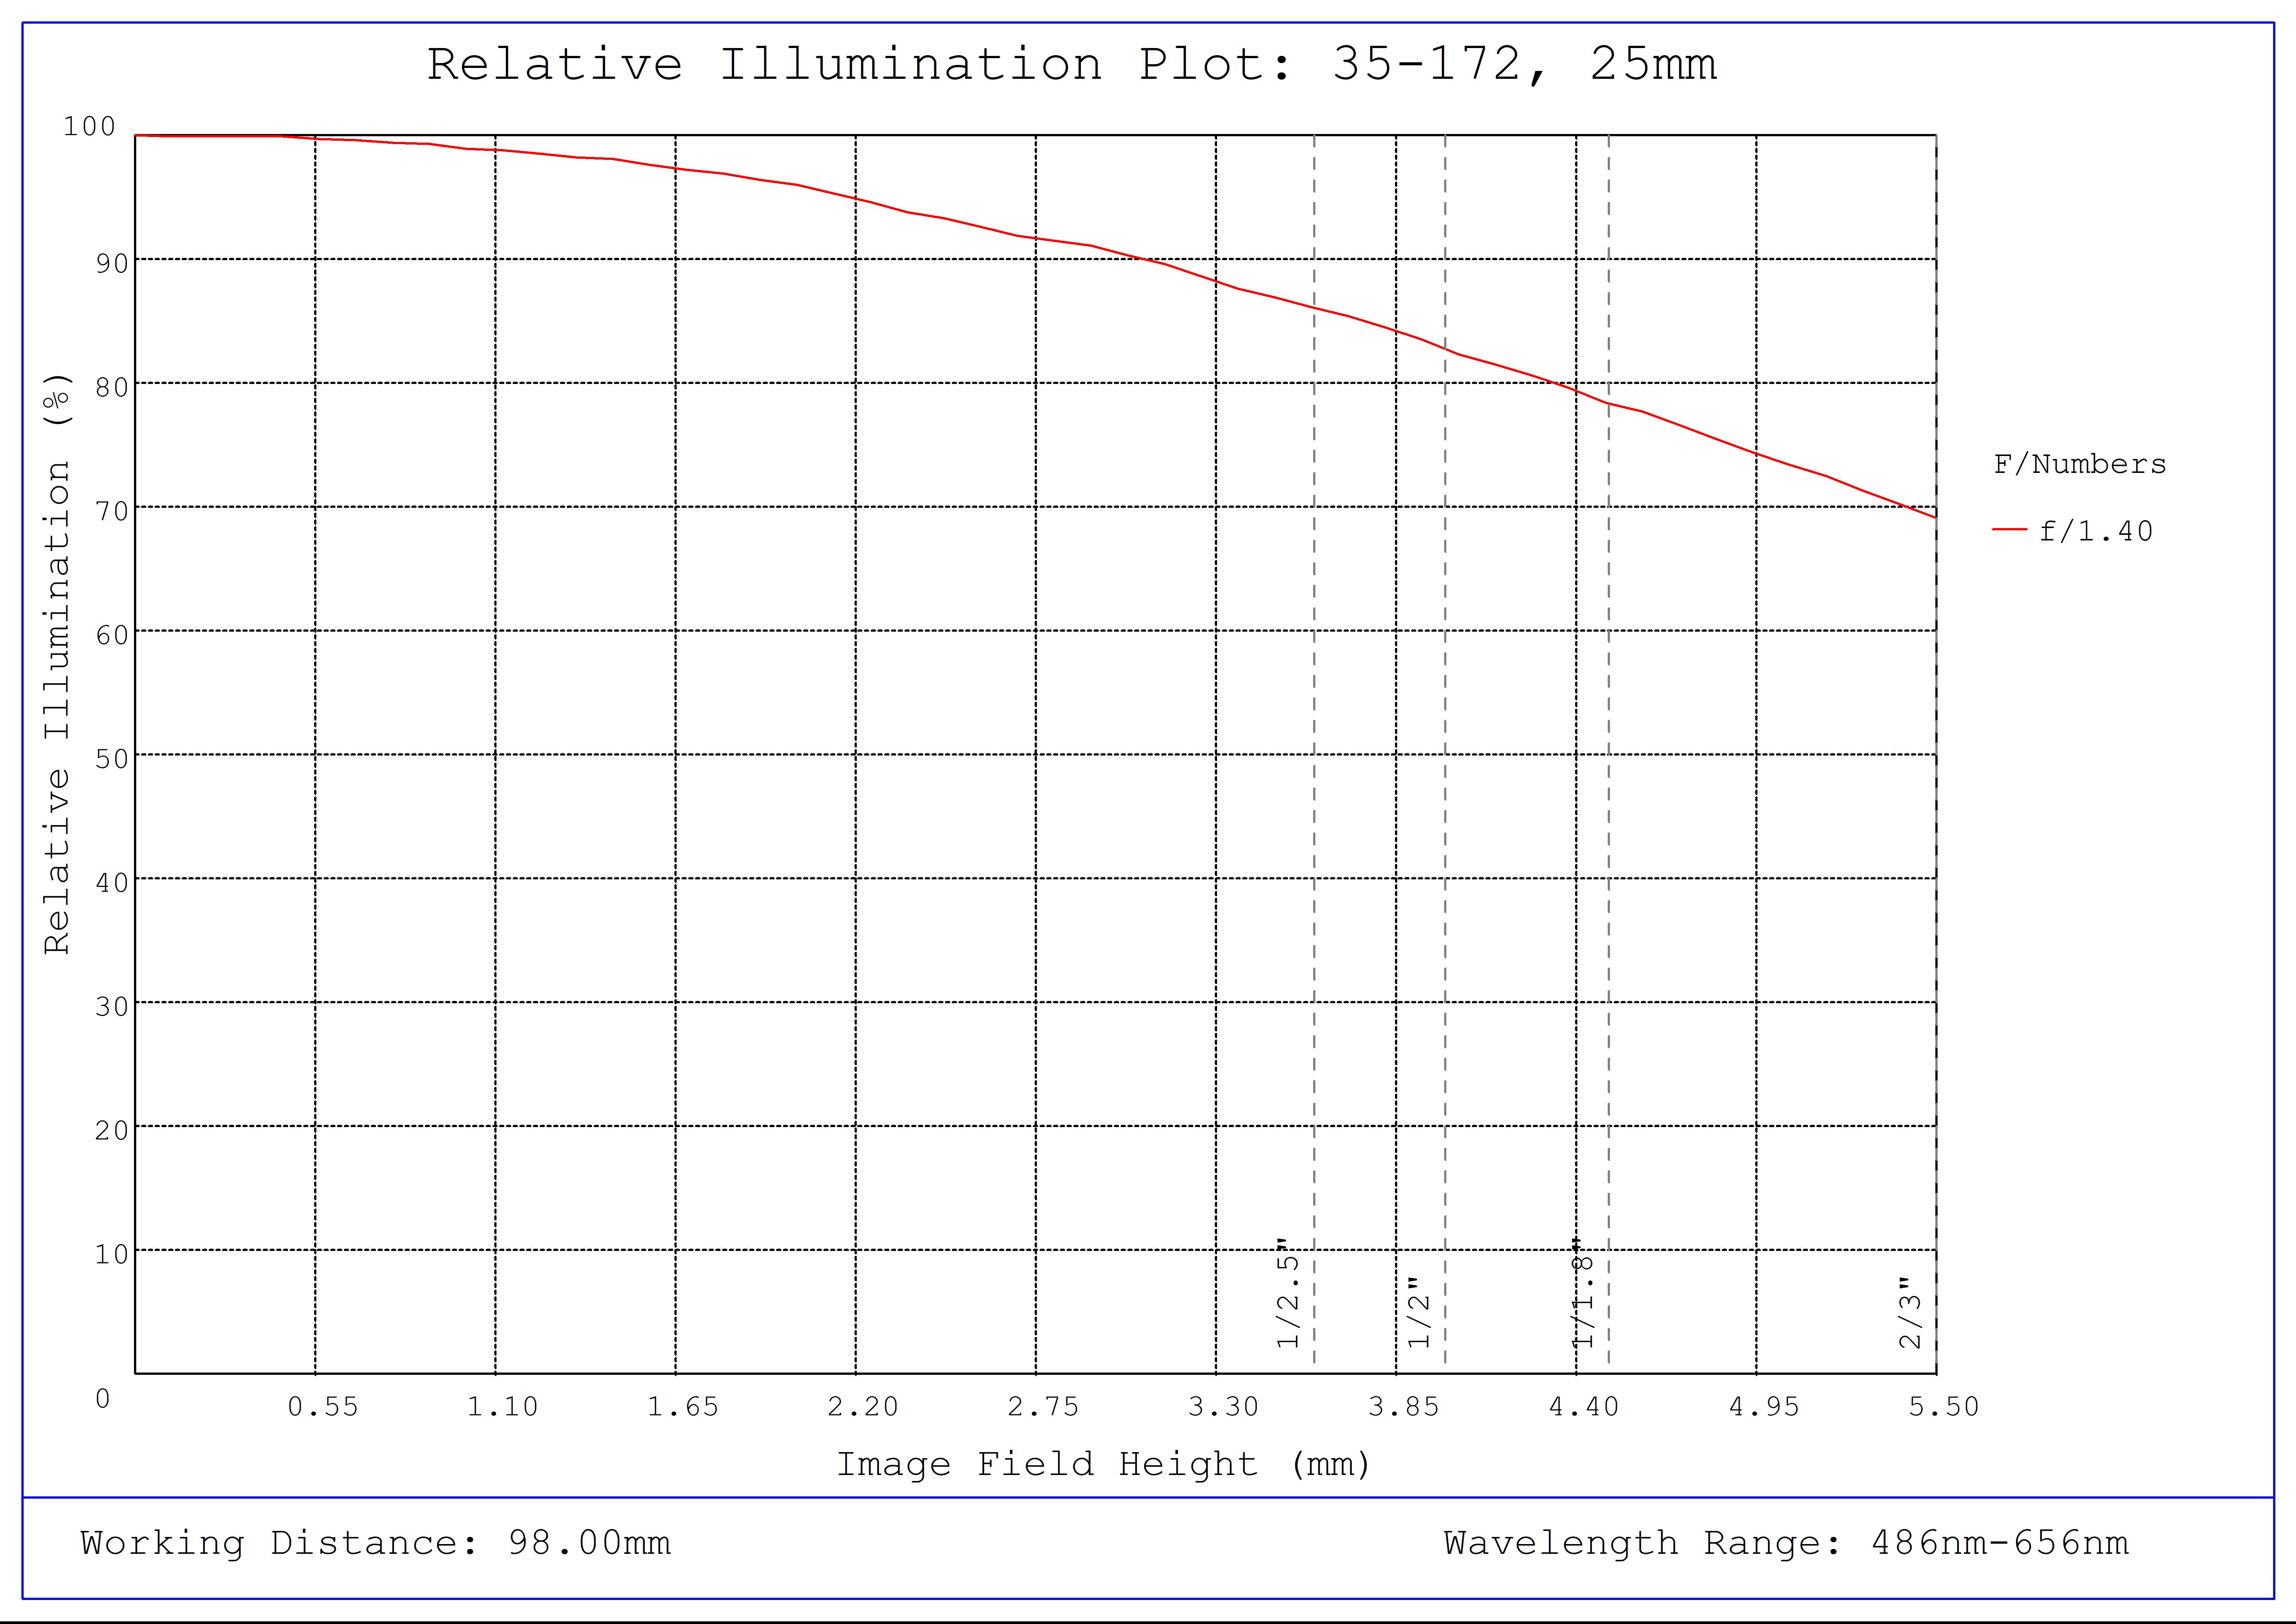 #35-172, 25mm, f/1.4 Cr Series Fixed Focal Length Lens, Relative Illumination Plot